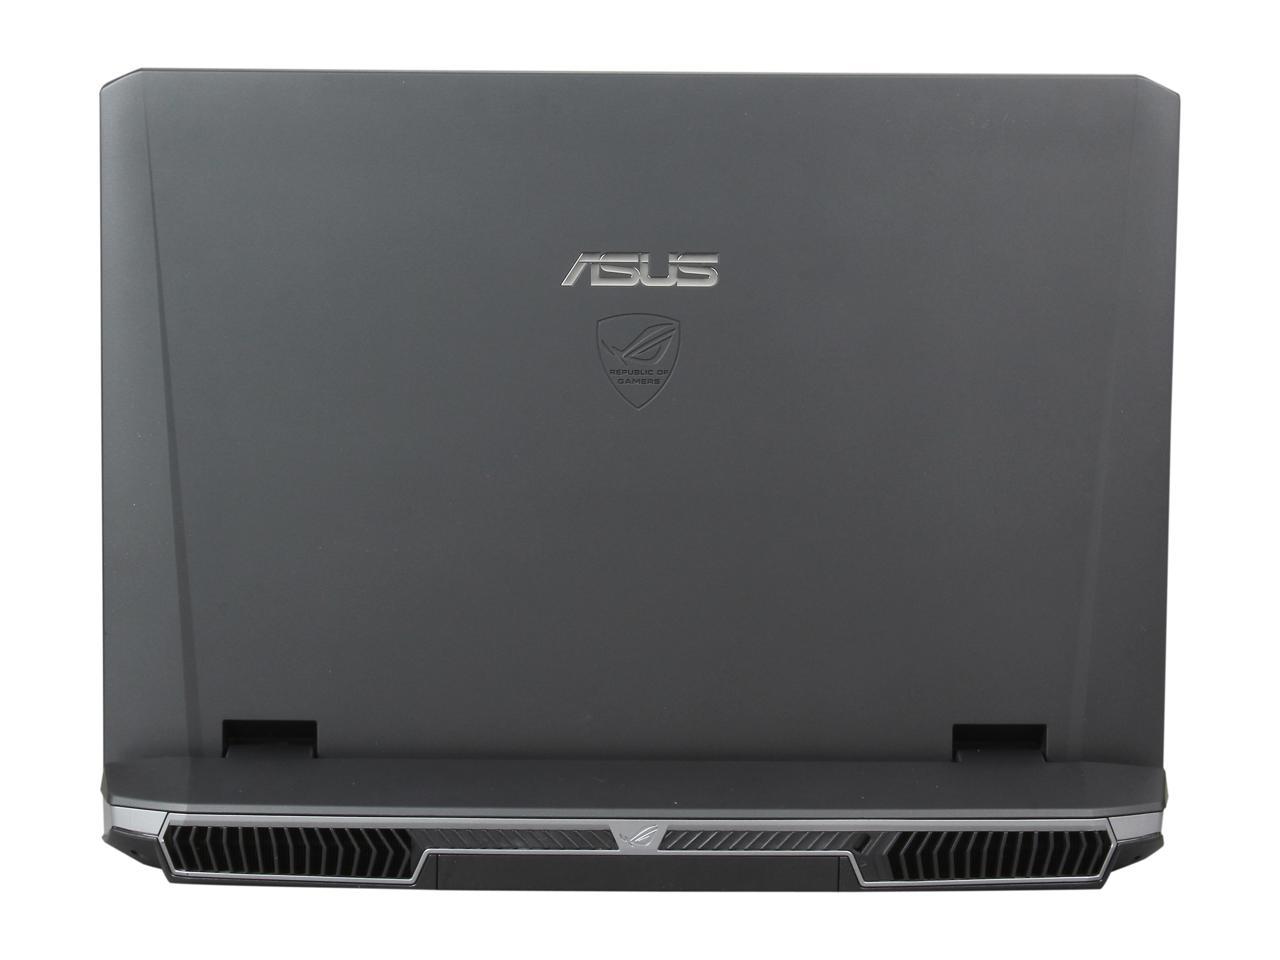 Refurbished: ASUS Laptop G75VW-TH72 Intel Core i7 3rd Gen 3630QM (2 ...